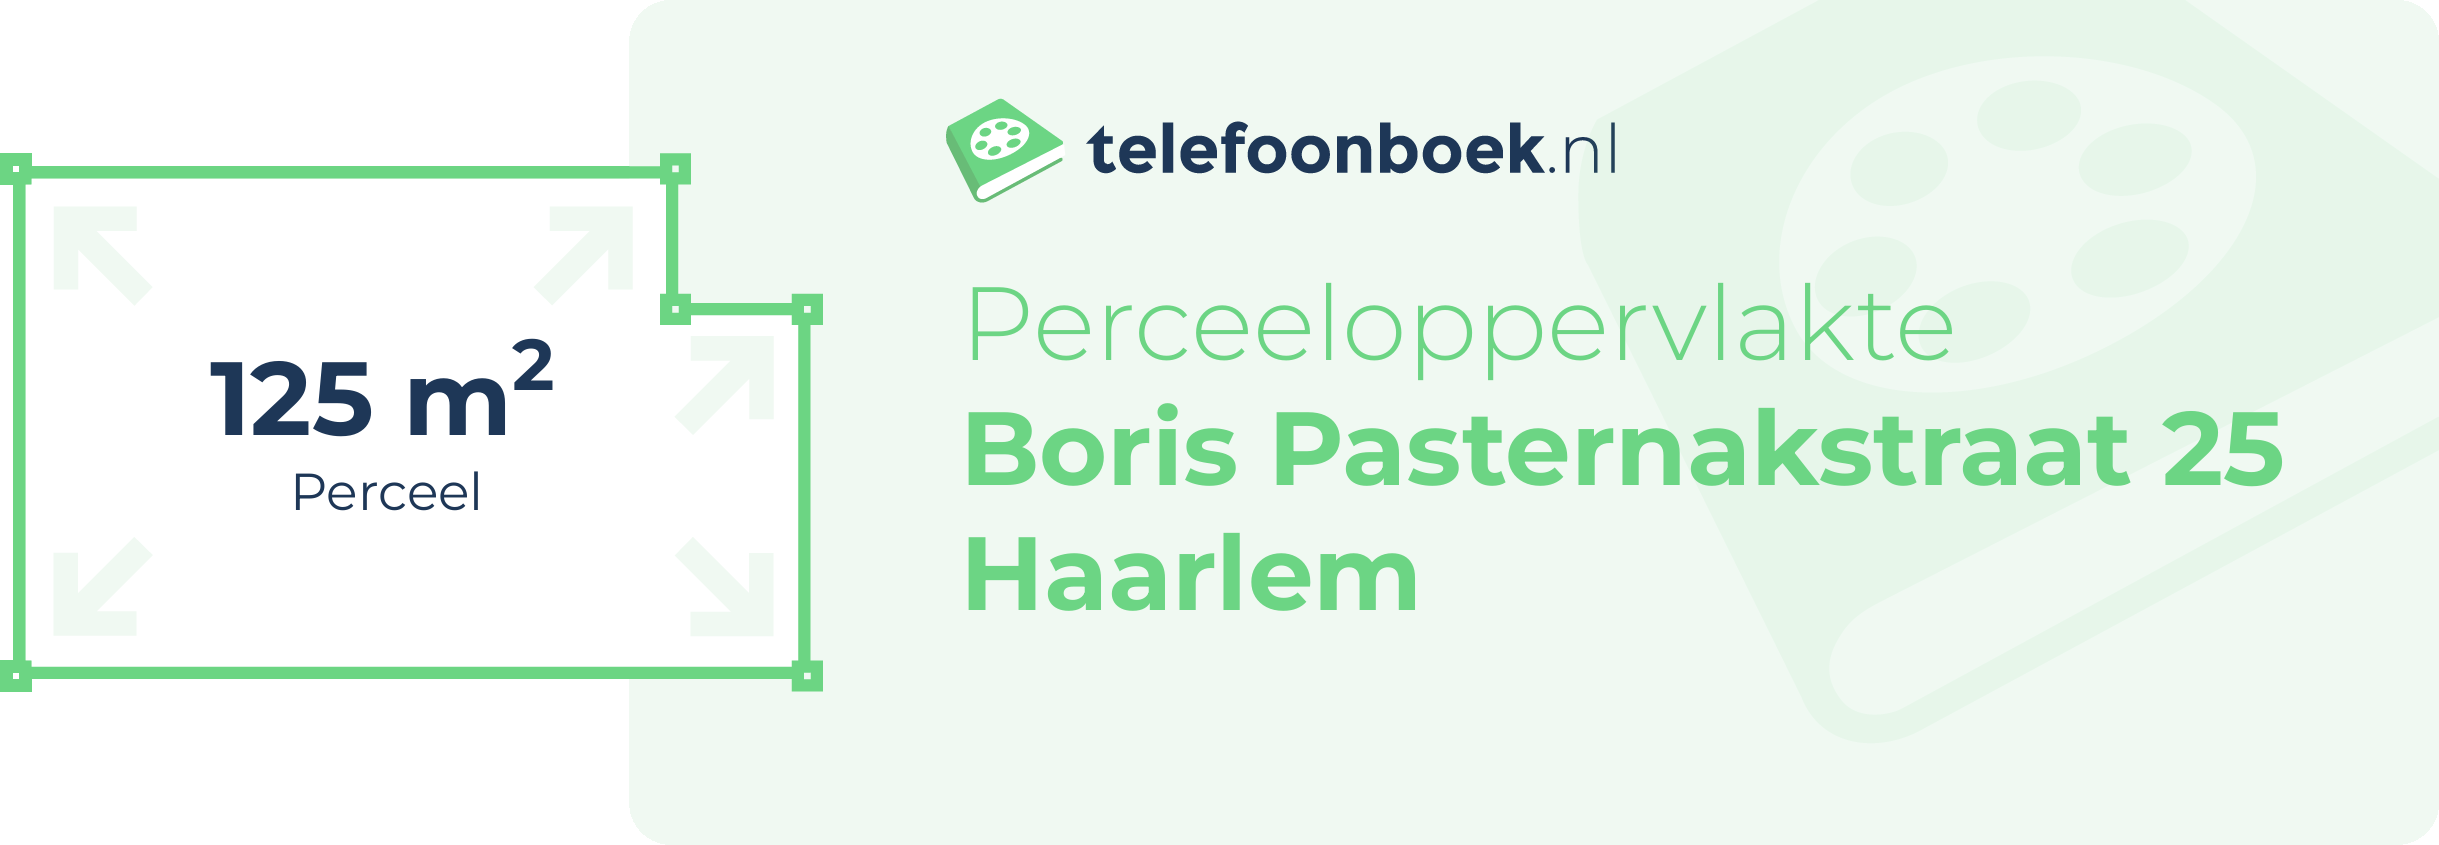 Perceeloppervlakte Boris Pasternakstraat 25 Haarlem